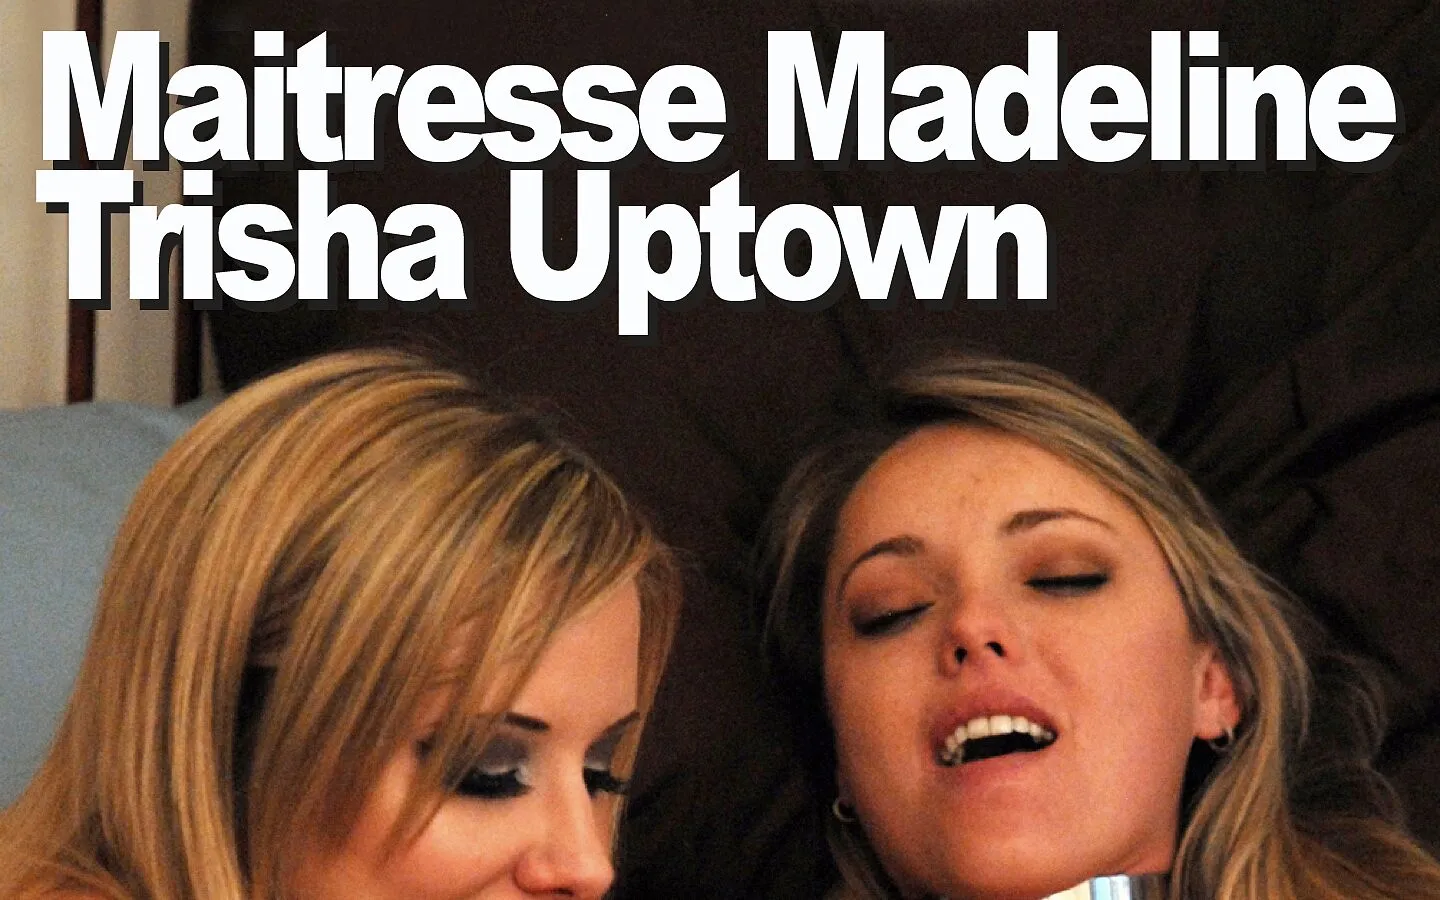 Yml Sex - Maitresse Madeline & Trisha Uptown Femdom Femsub Dildo Pink Climax by  Picticon bondage and fetish | Faphouse